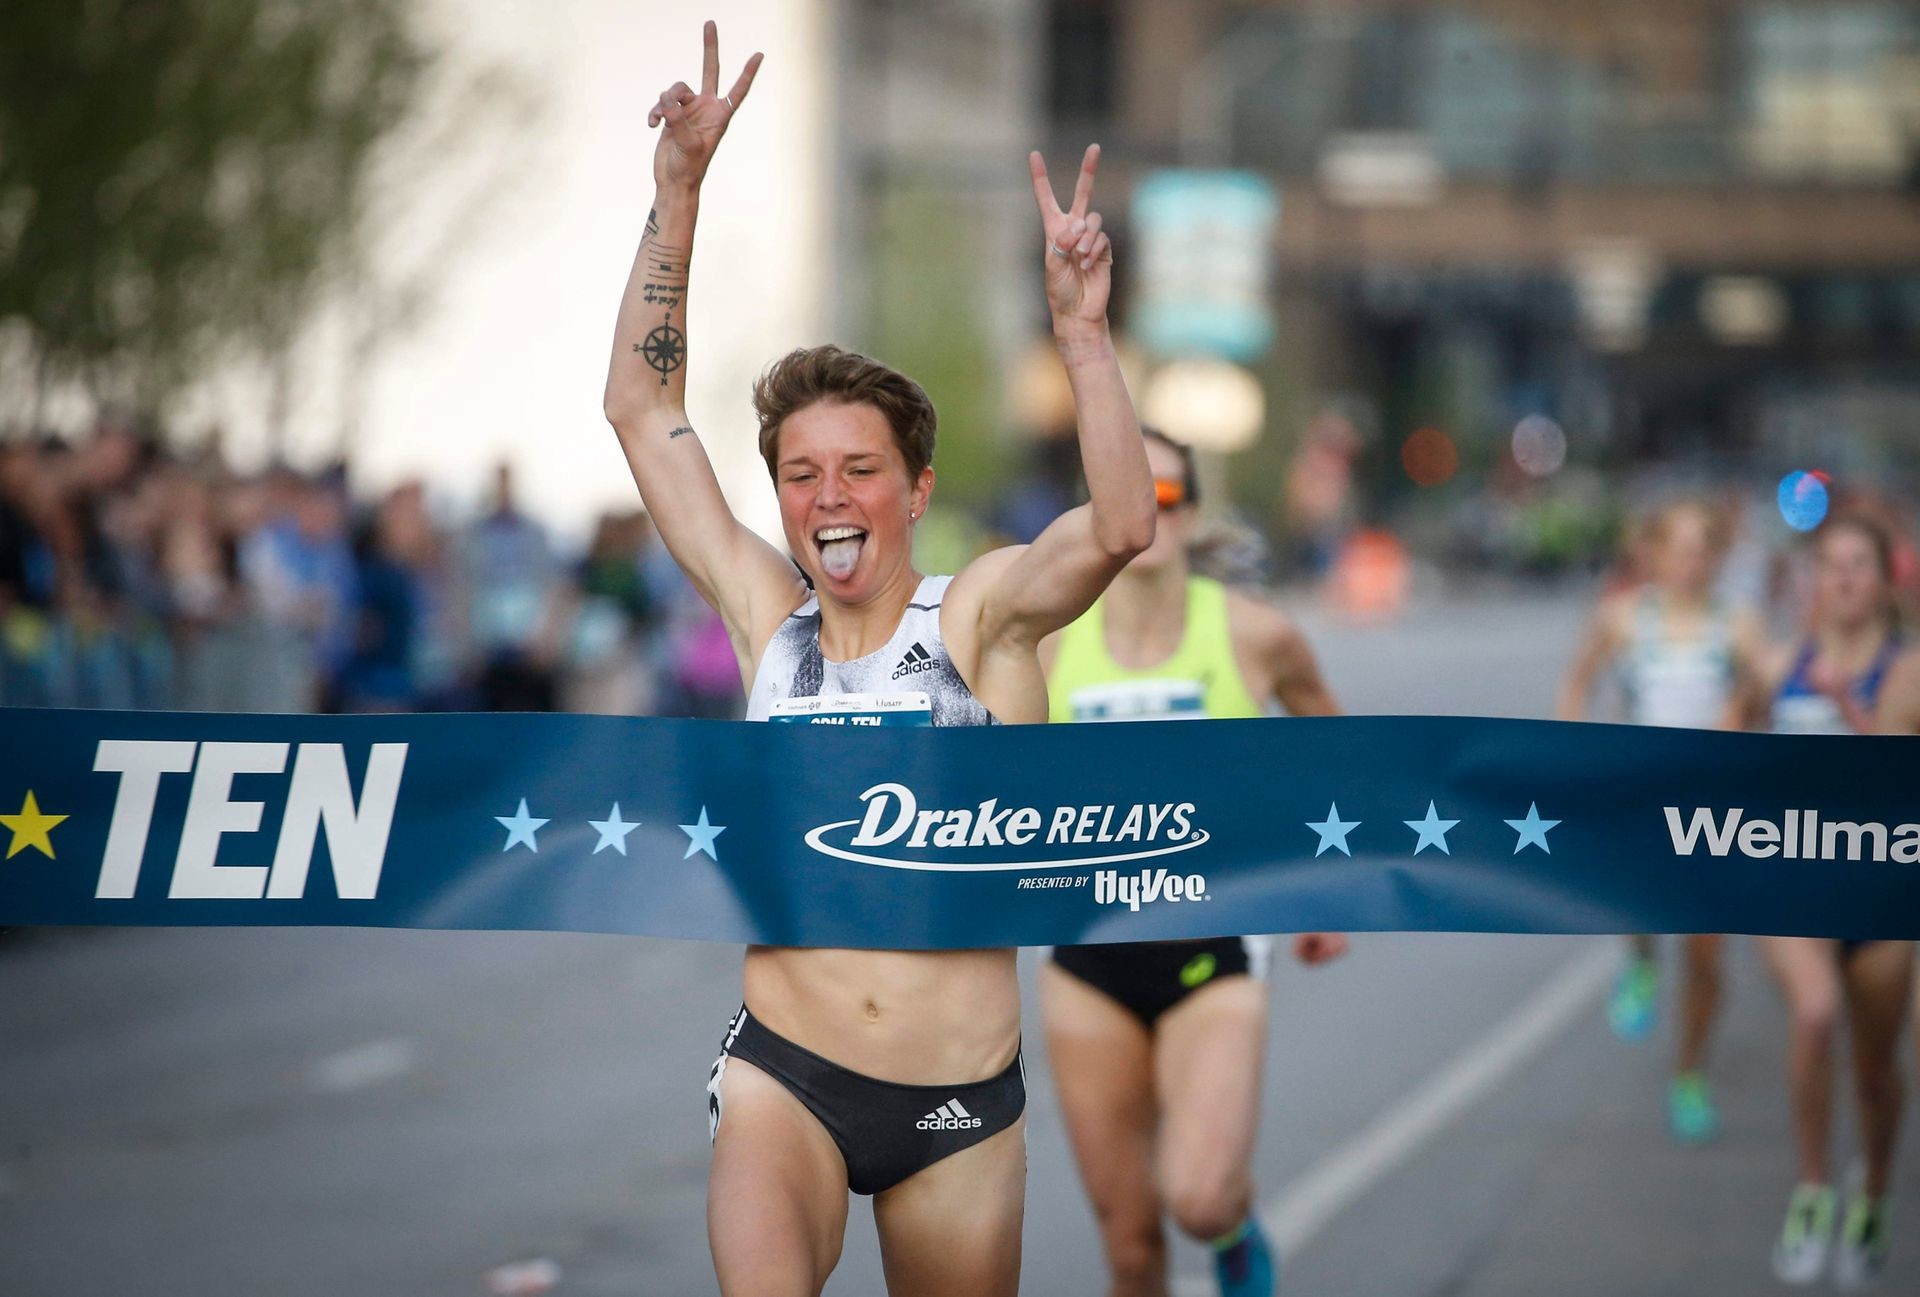 San Diego runner Nikki Hiltz, set a new Blue Mile record in the Women's